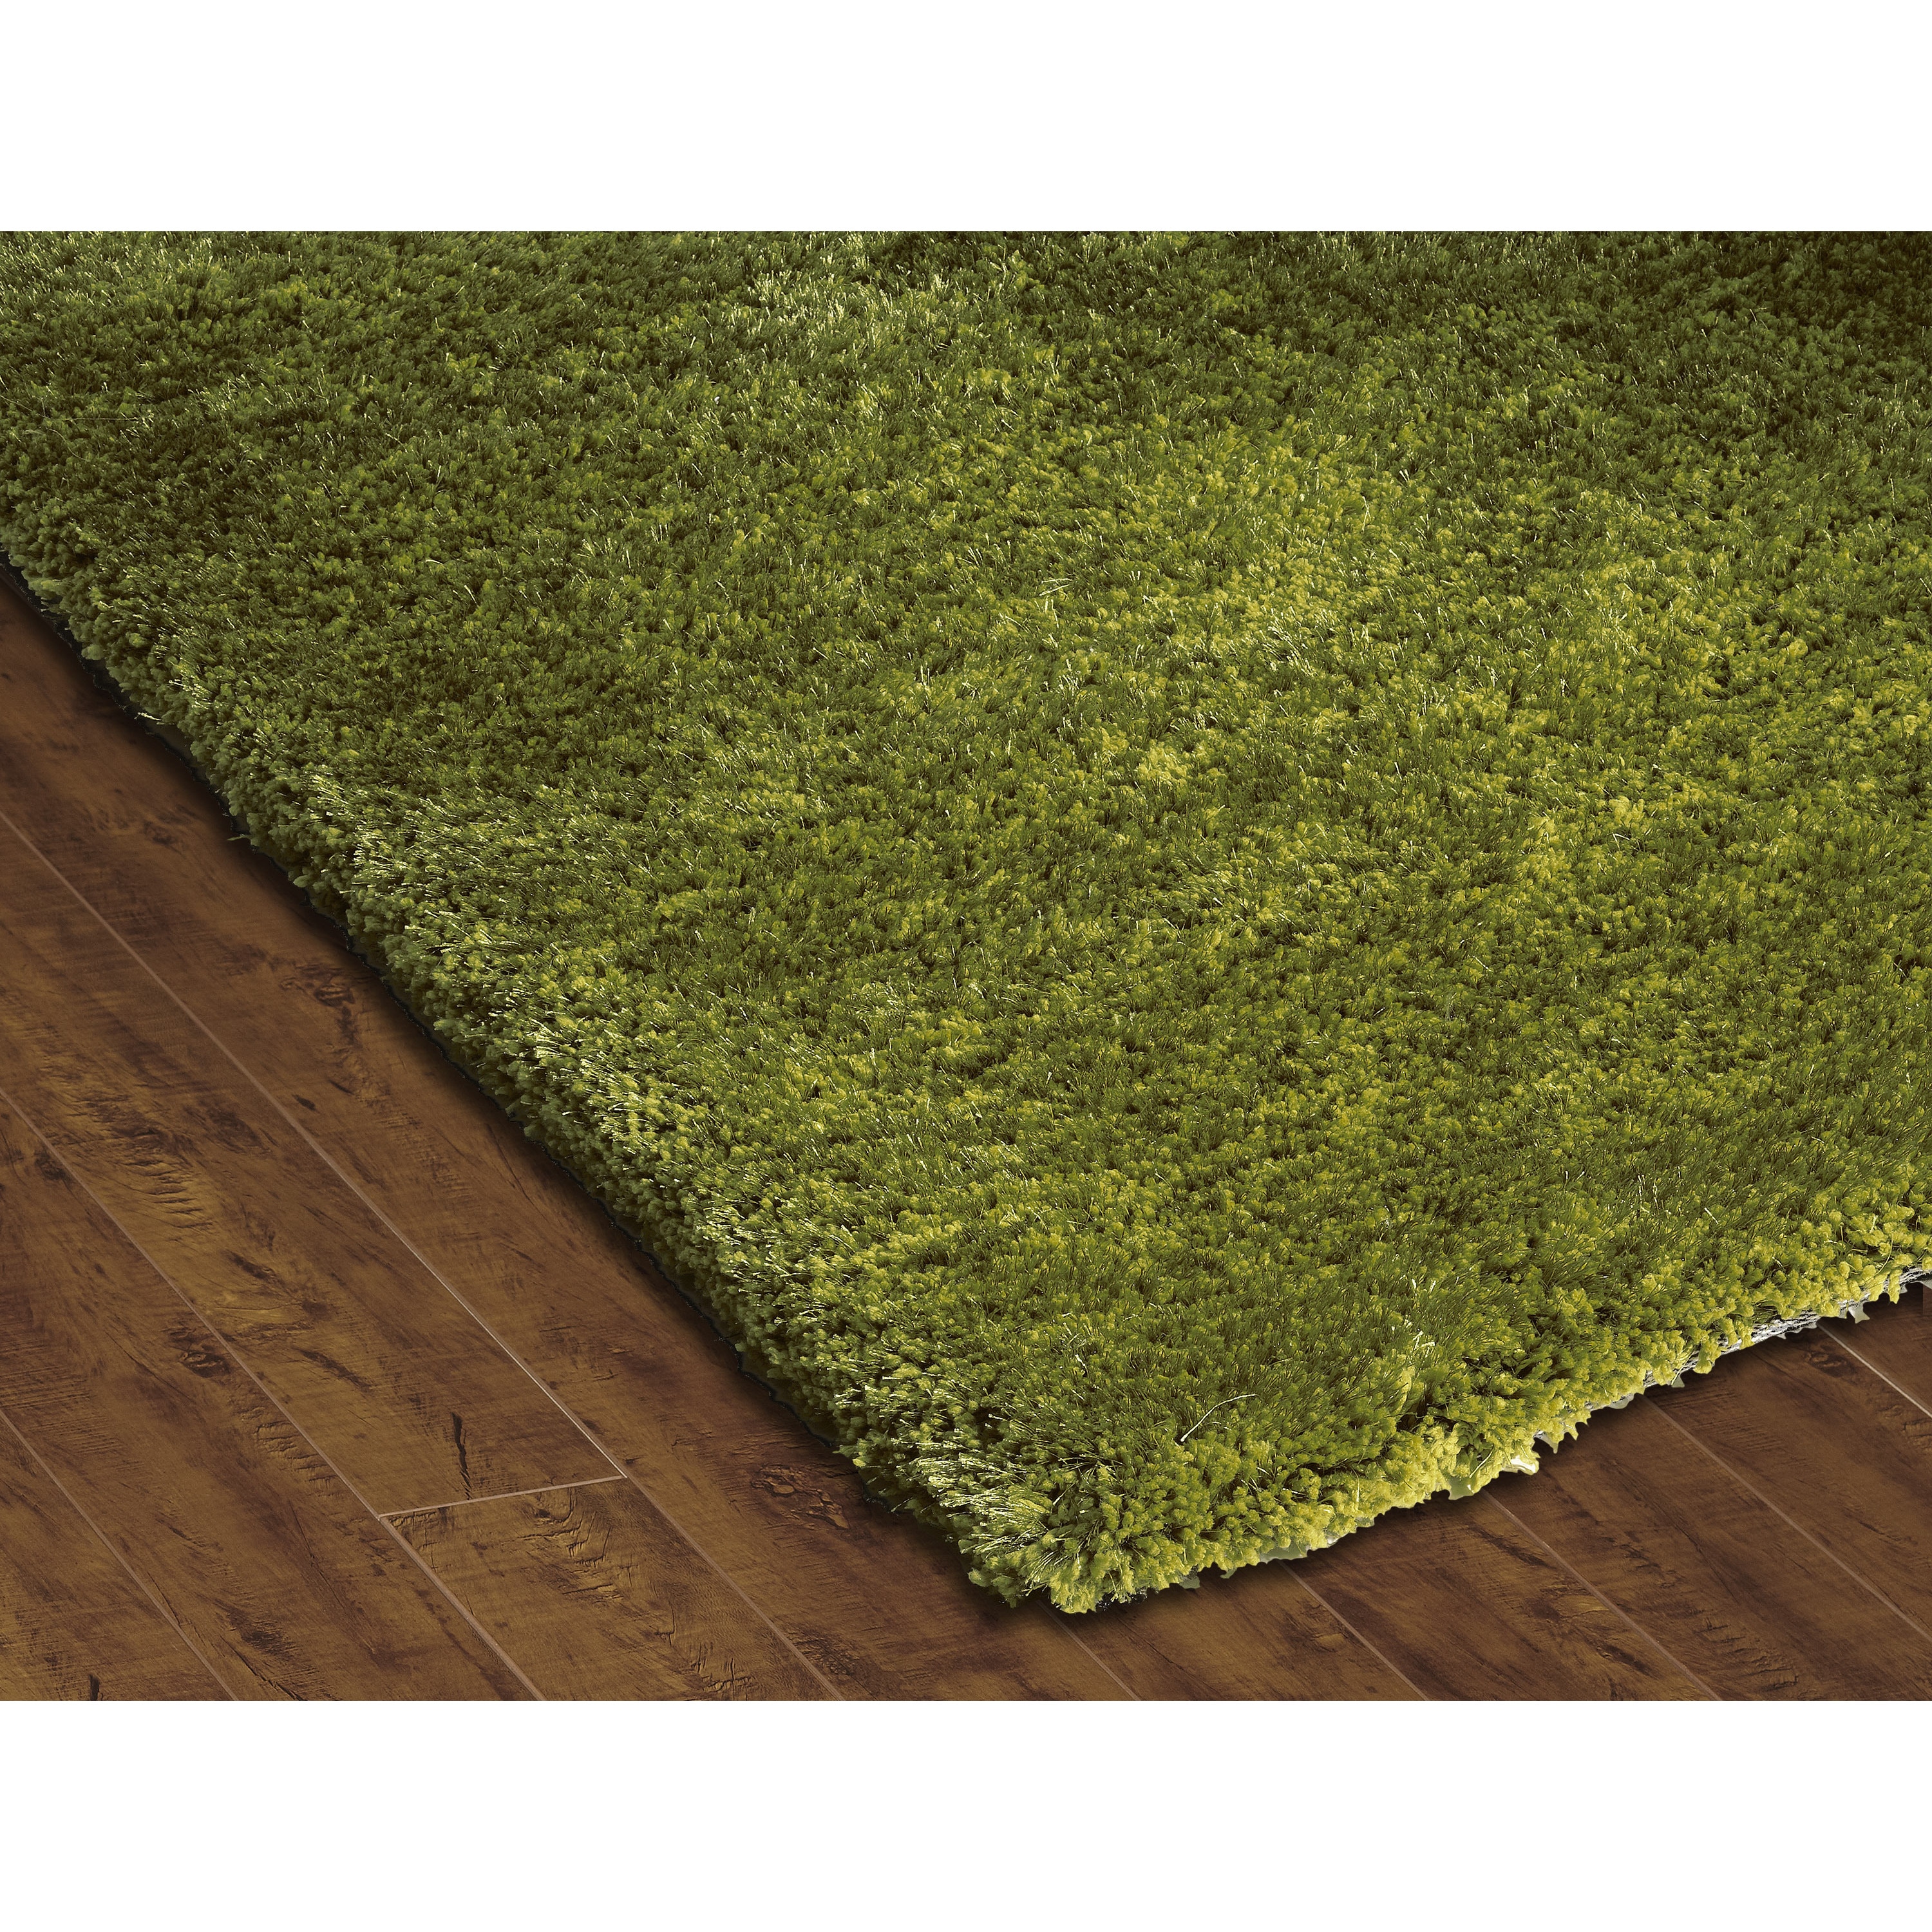 Sands Soft Shag Emerald Green Area Rug (36 X 56)